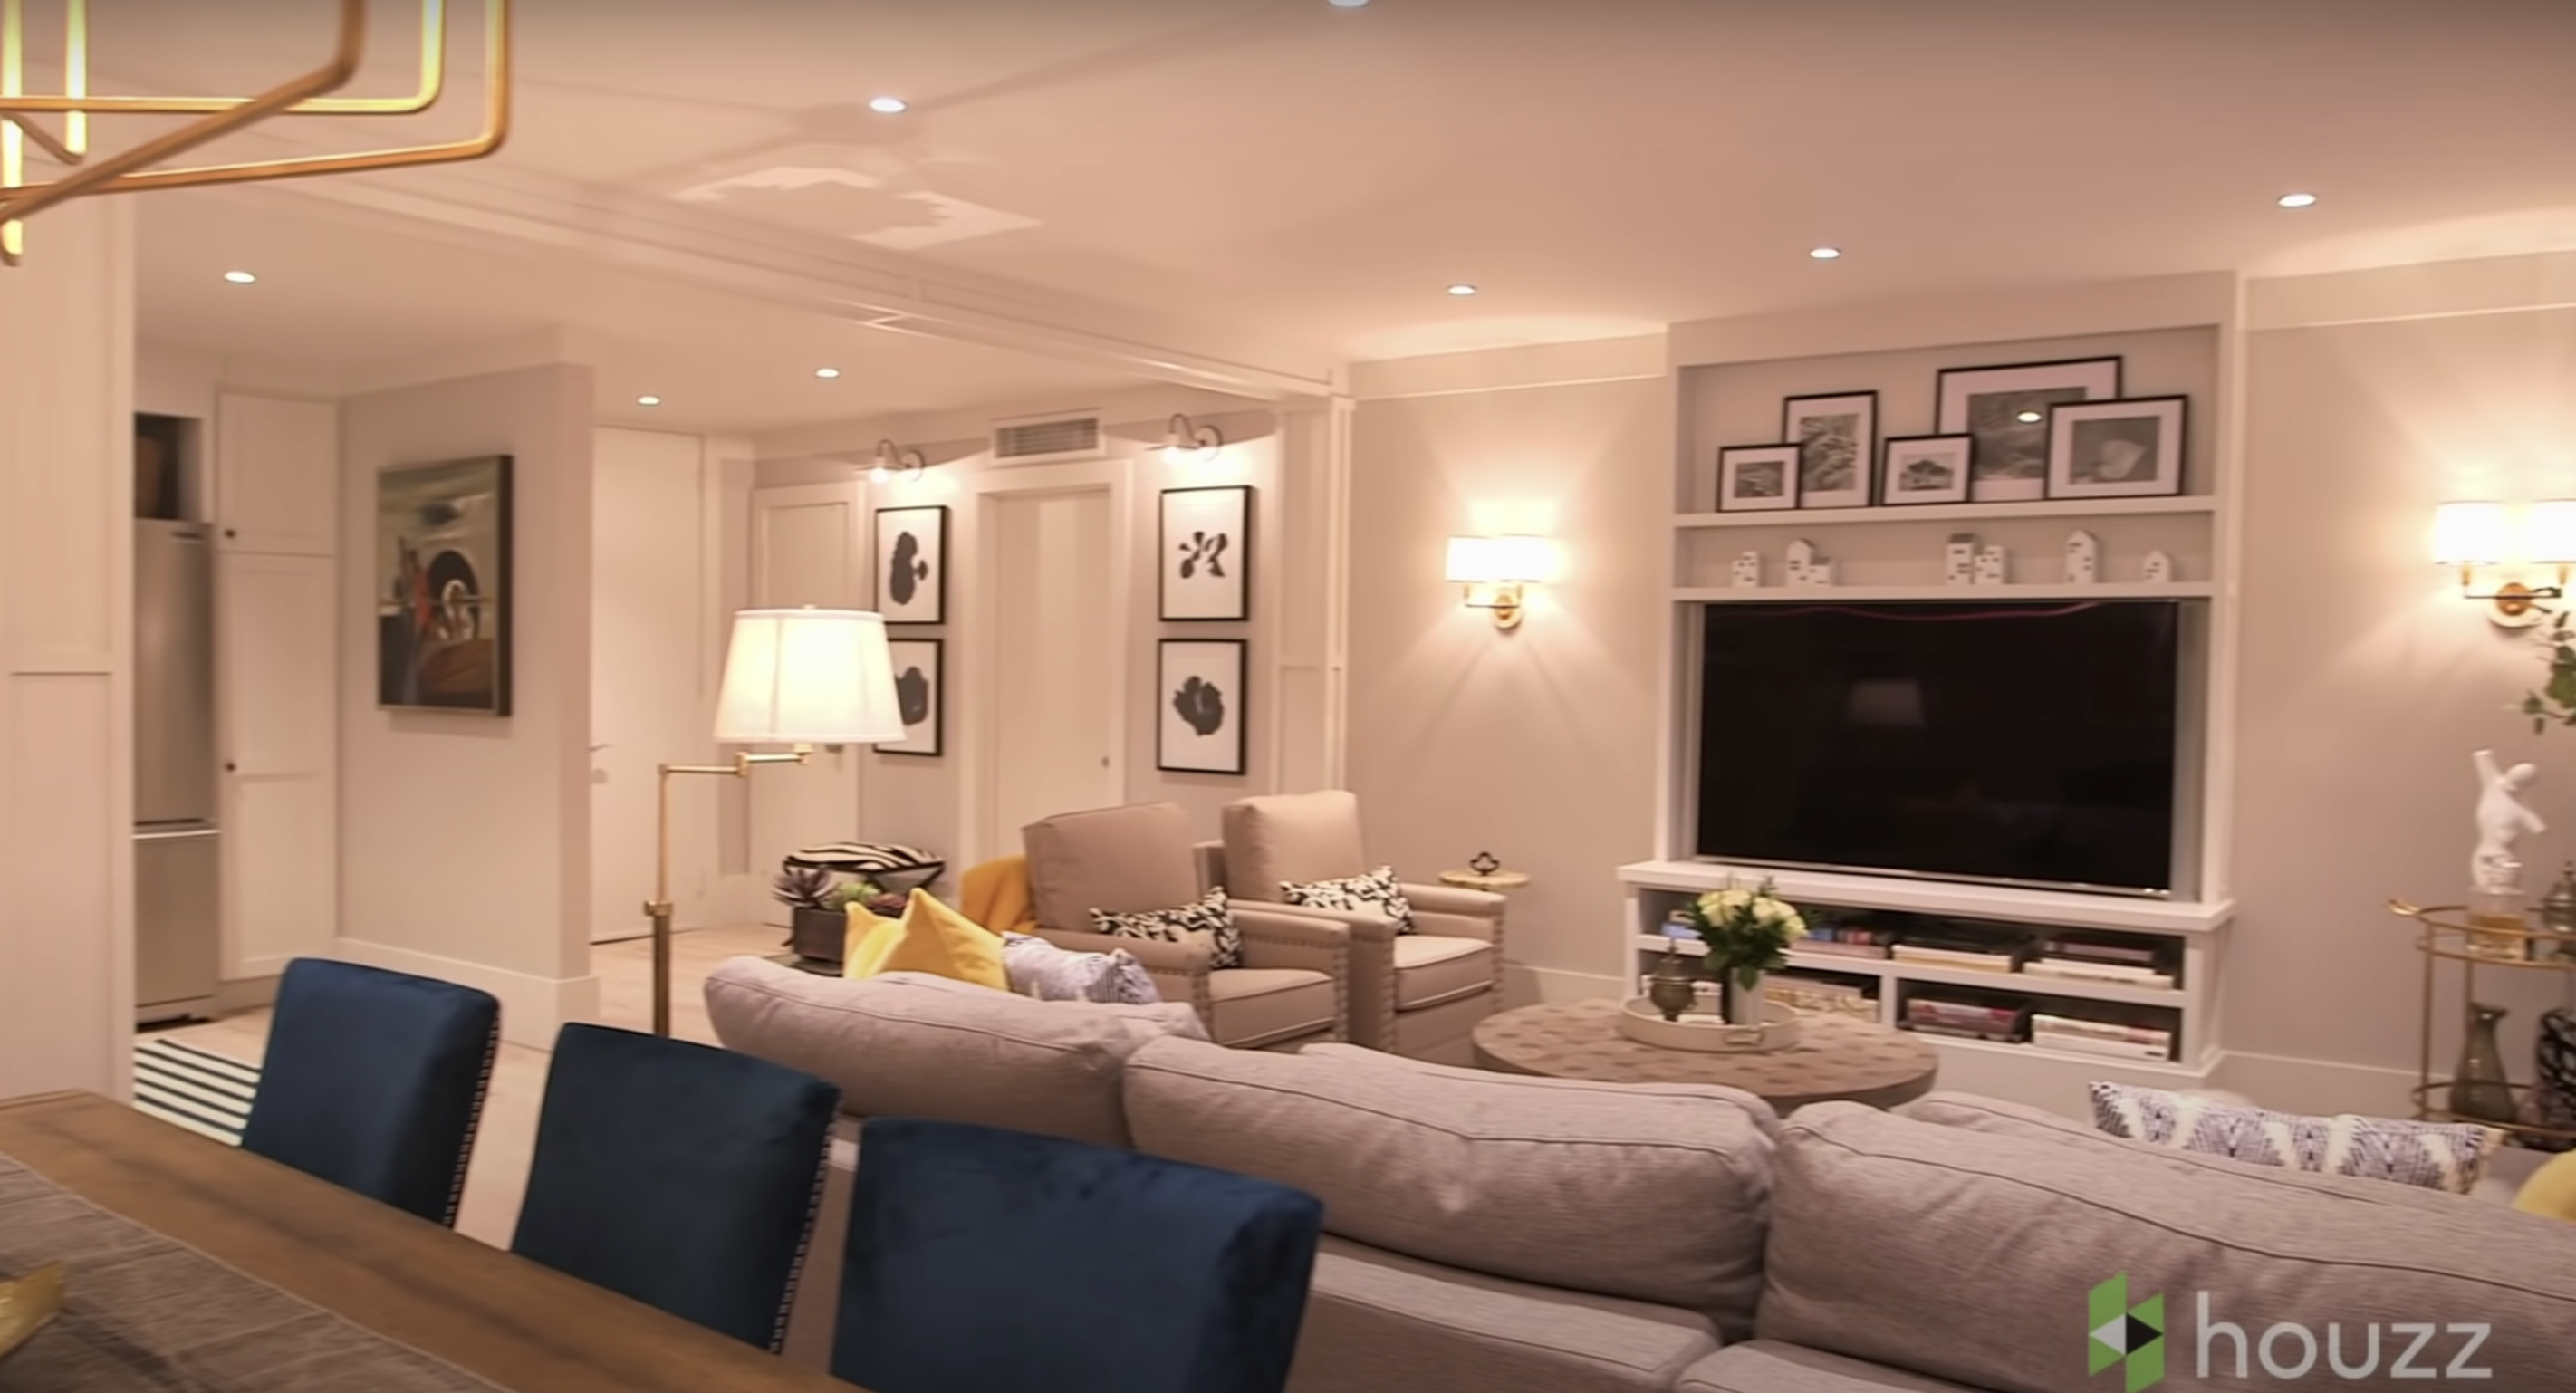 The living space of Mila Kunis' revamped family condo | Source: Youtube.com/HouzzTV